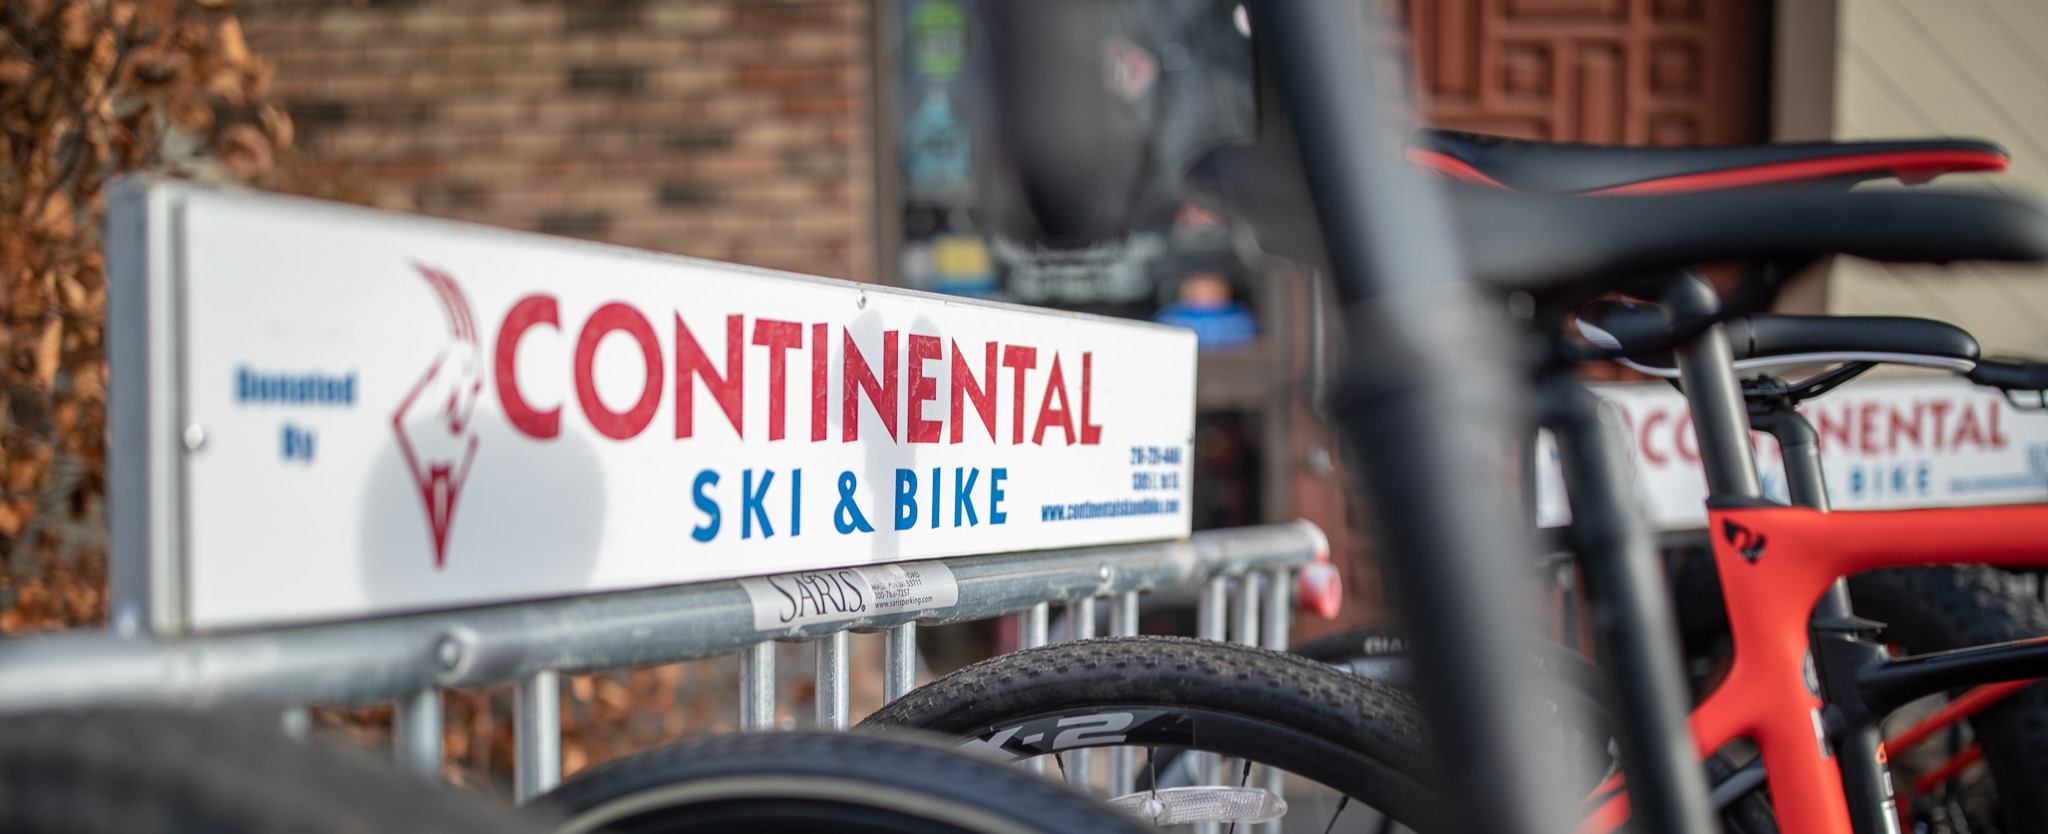 Used Rental Gear For Sale Continental Ski Bike